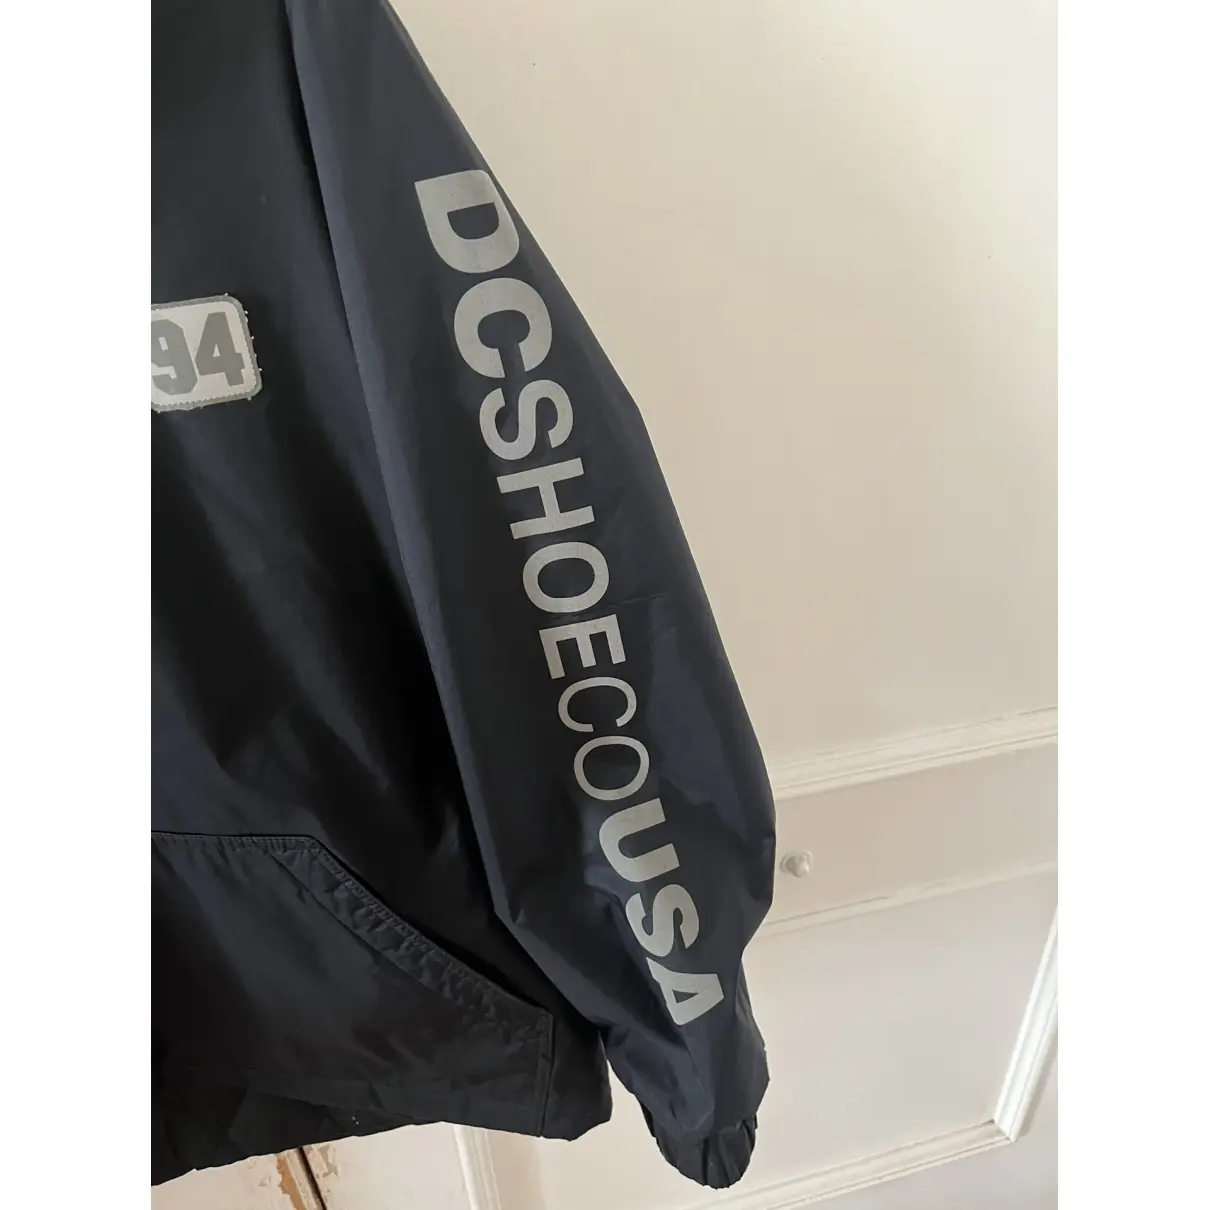 Buy DC SHOES Jacket online